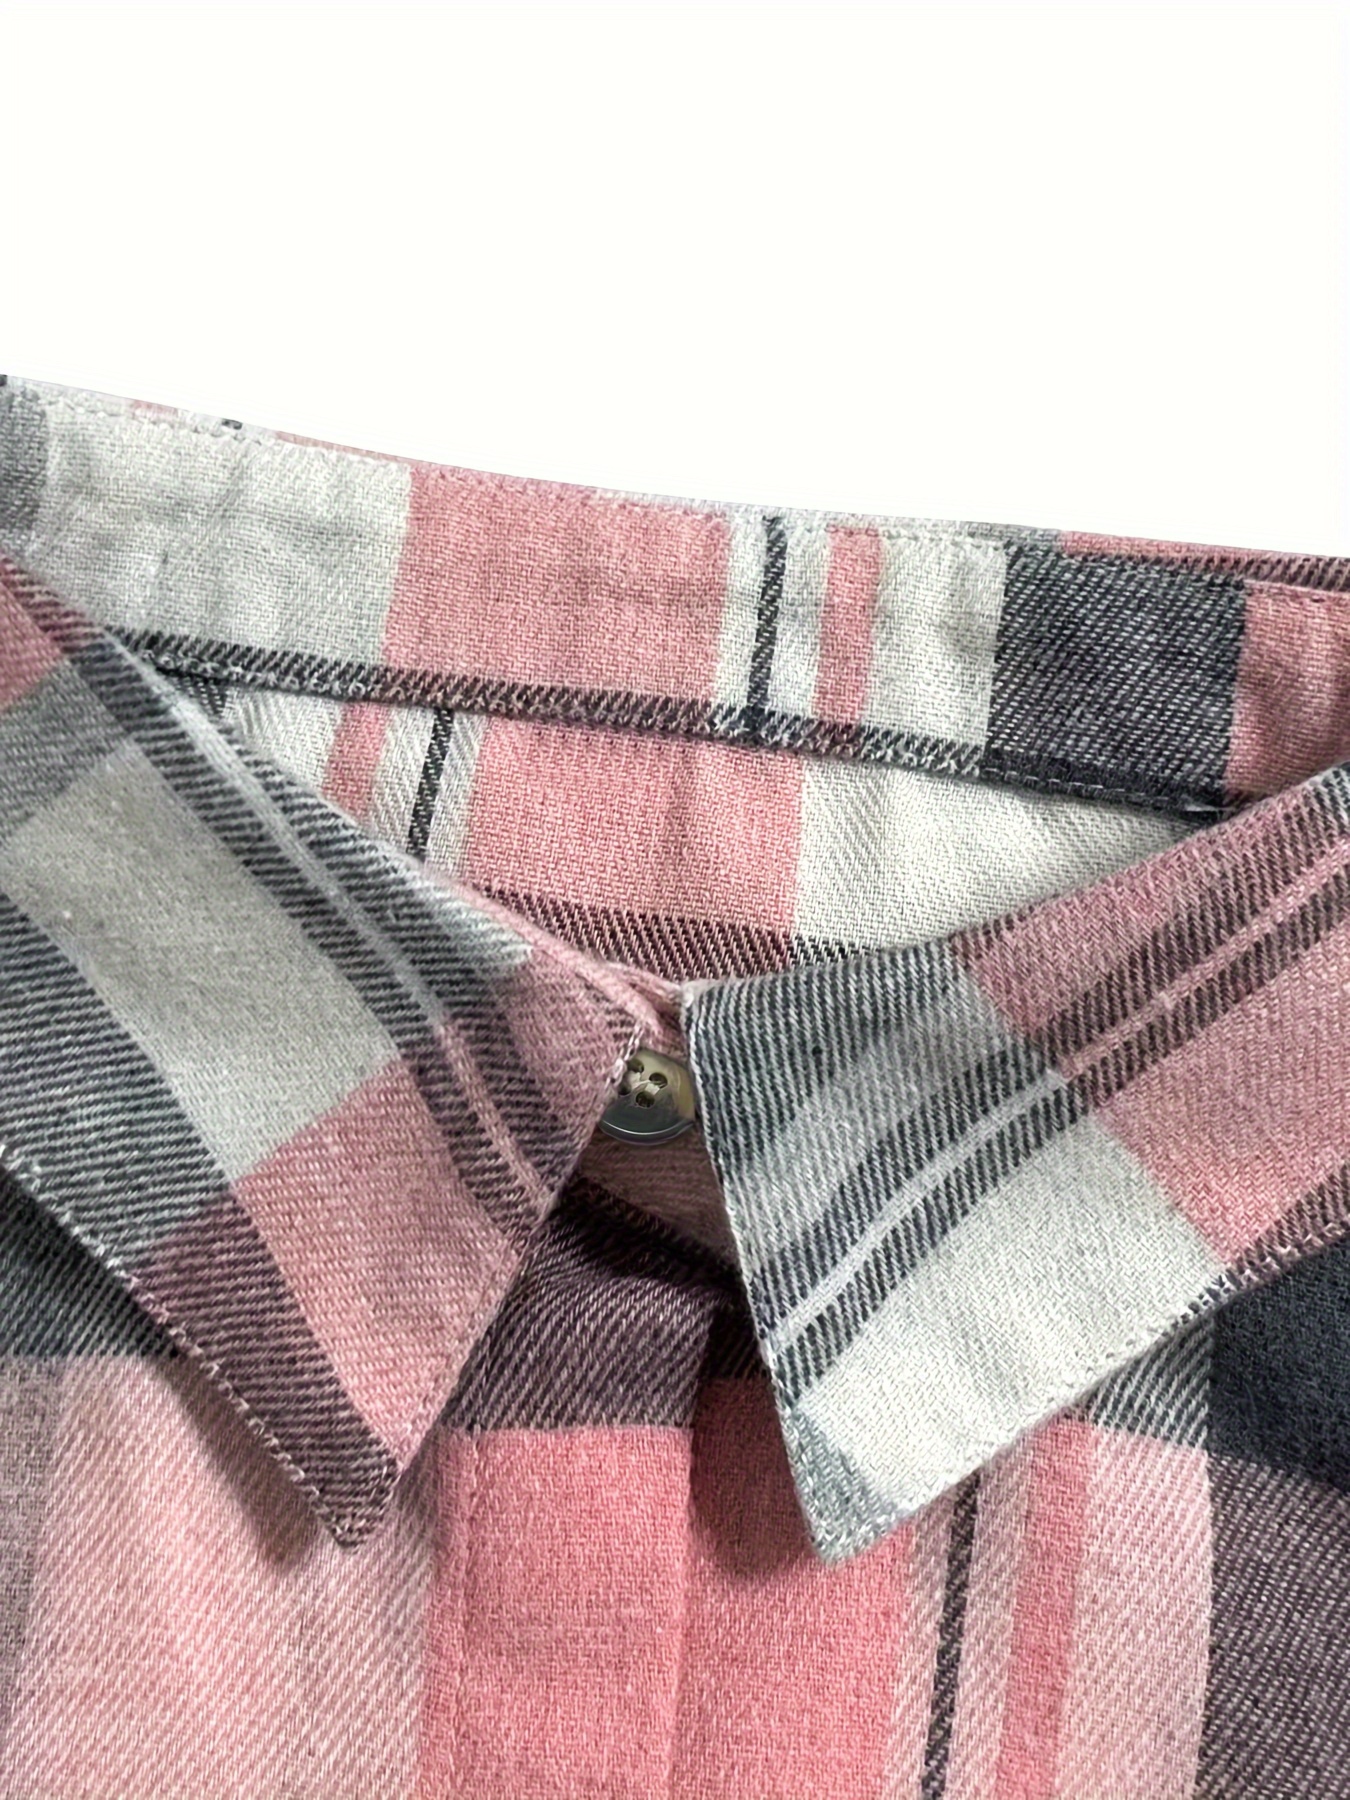 plaid print polo collar button shirt casual pocket long sleeve shirt for spring fall womens clothing details 0